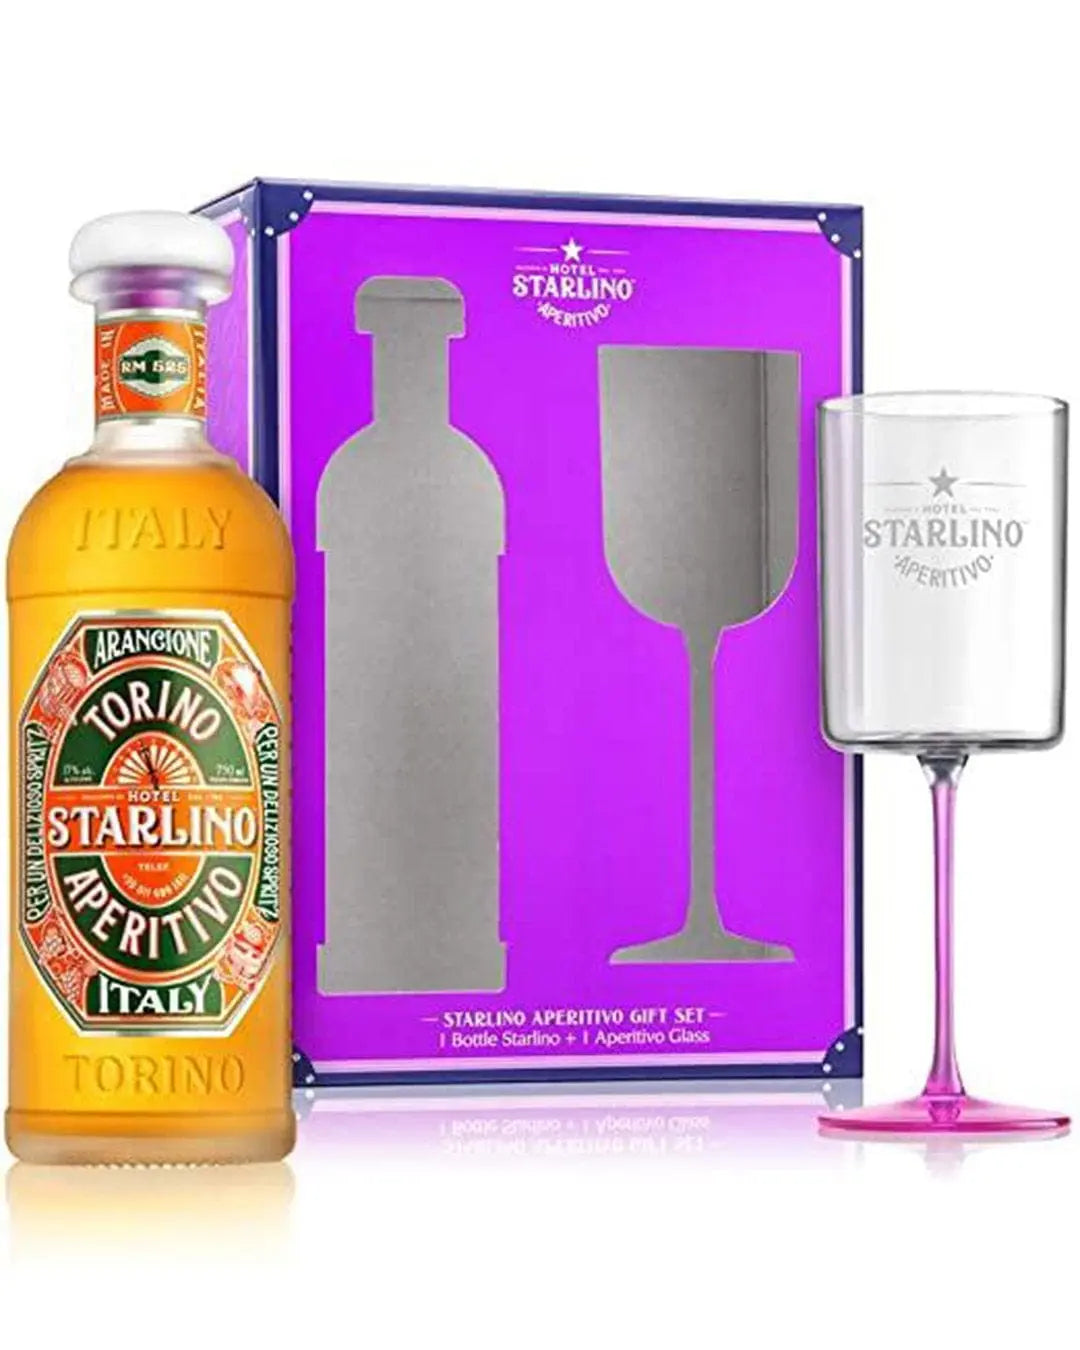 Hotel Starlino Arancione Aperitivo Spritz Gift Set with Aperitivo Glass, 75 cl Liqueurs & Other Spirits